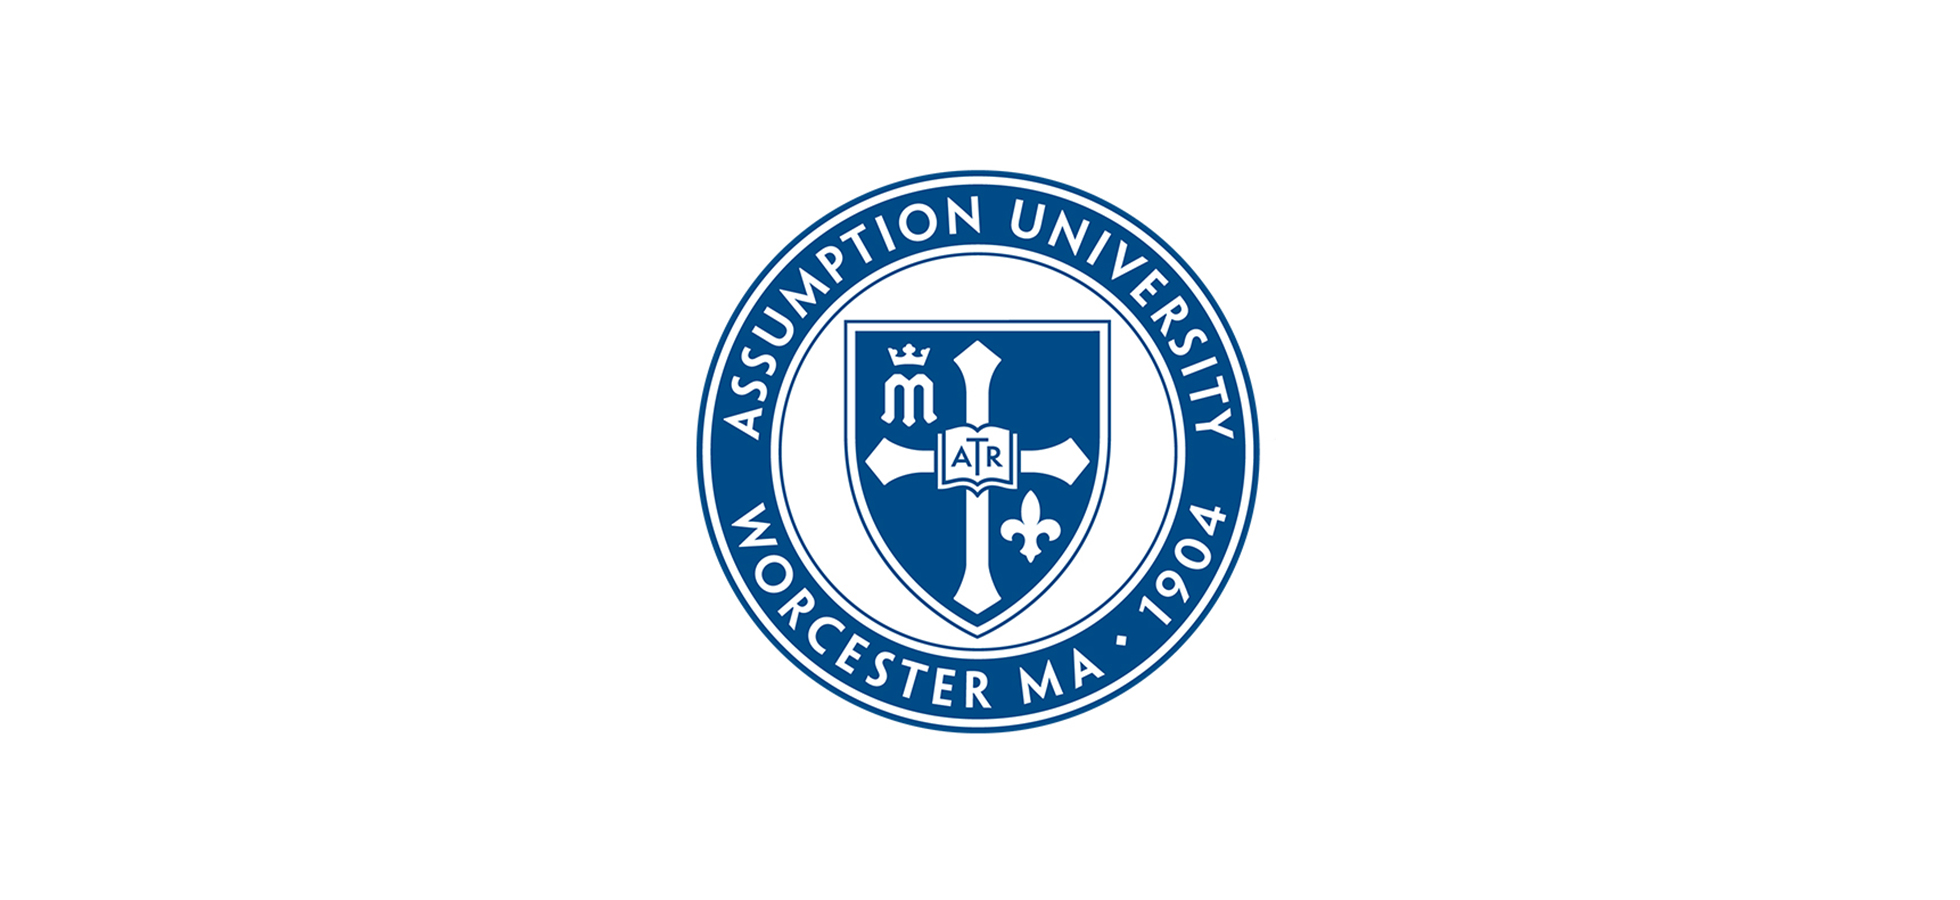 Trustees Appoint Provost Weiner, Ph.D., Interim President of Assumption University